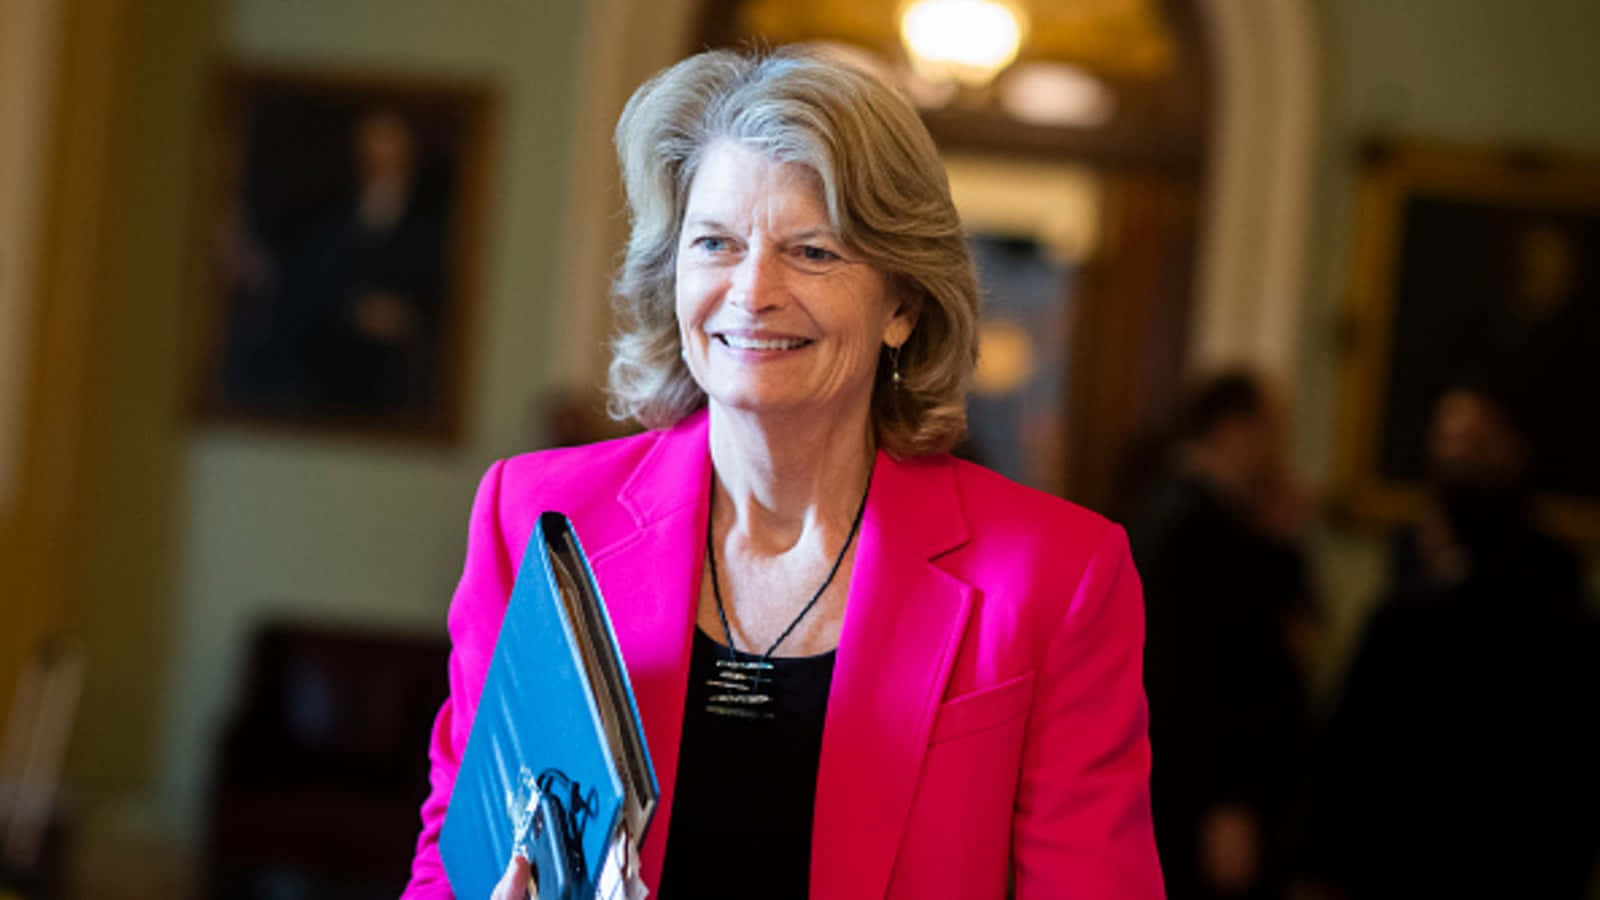 Lisa Murkowski, U.S. Senator, in a Smiling Pose Wallpaper